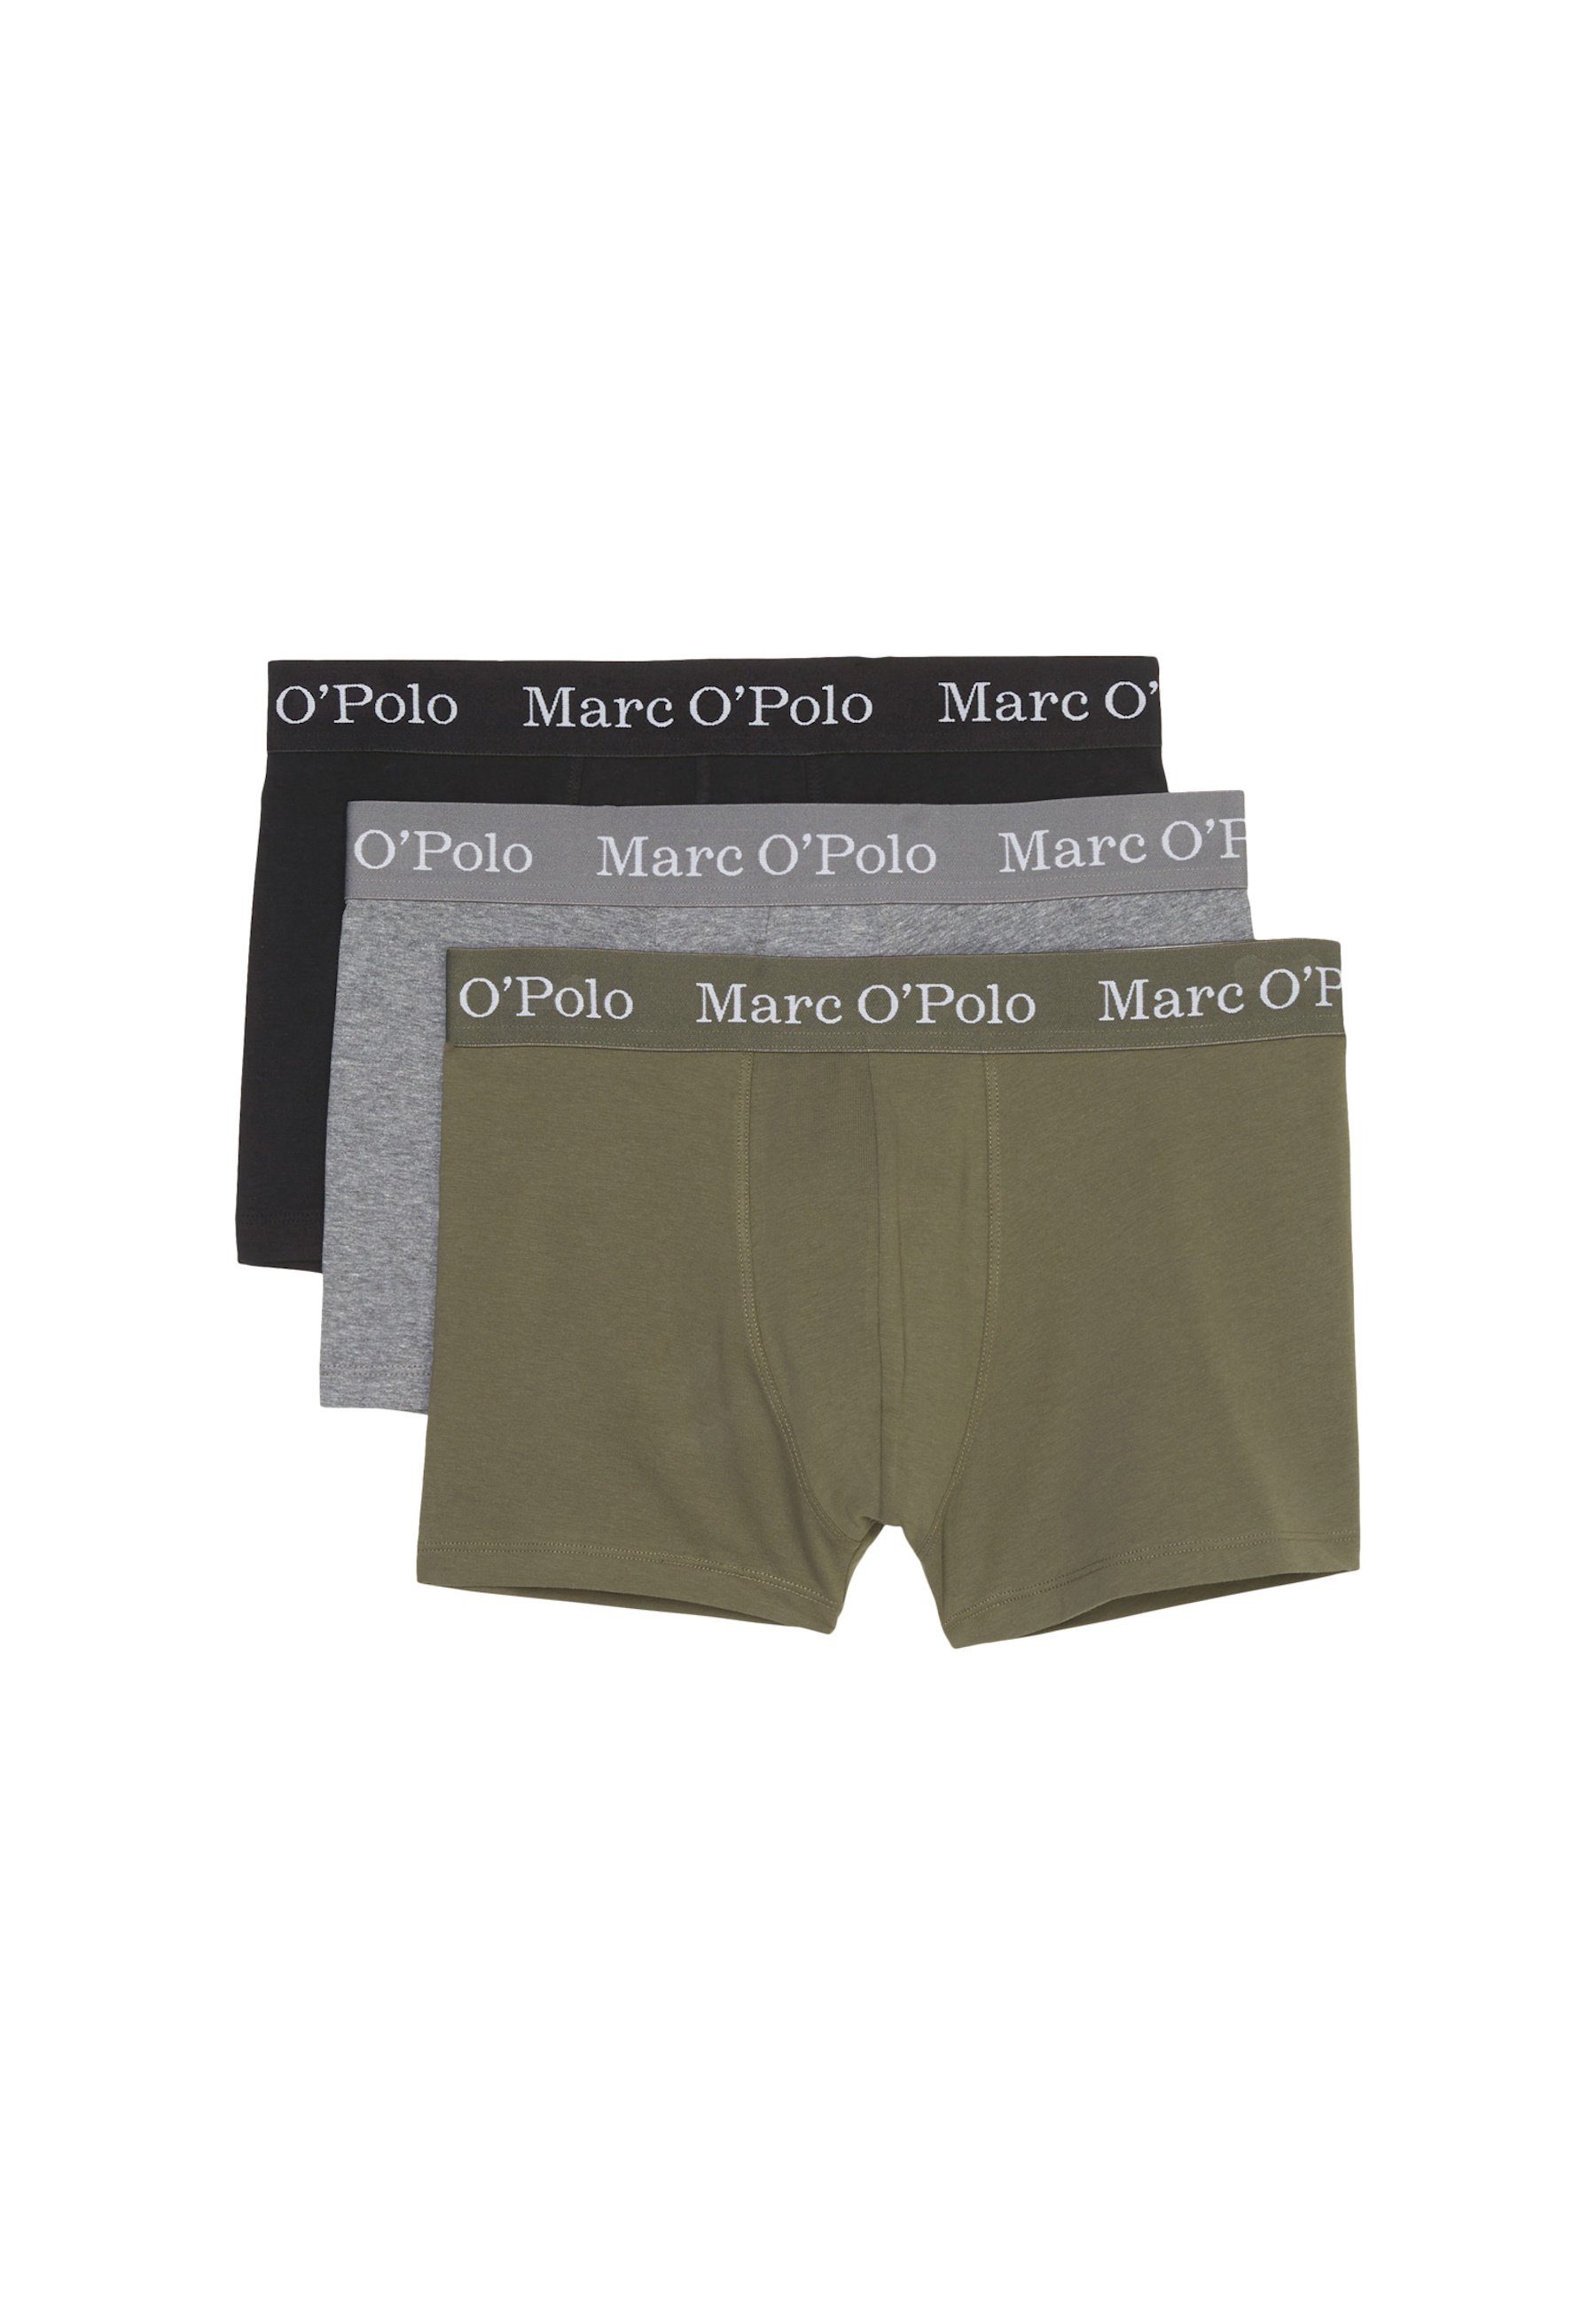 Beetle/Grey Basic Boxershorts (3-St) Boxershorts Dreierpack O'Polo Unterhosen Marc Melange/Black